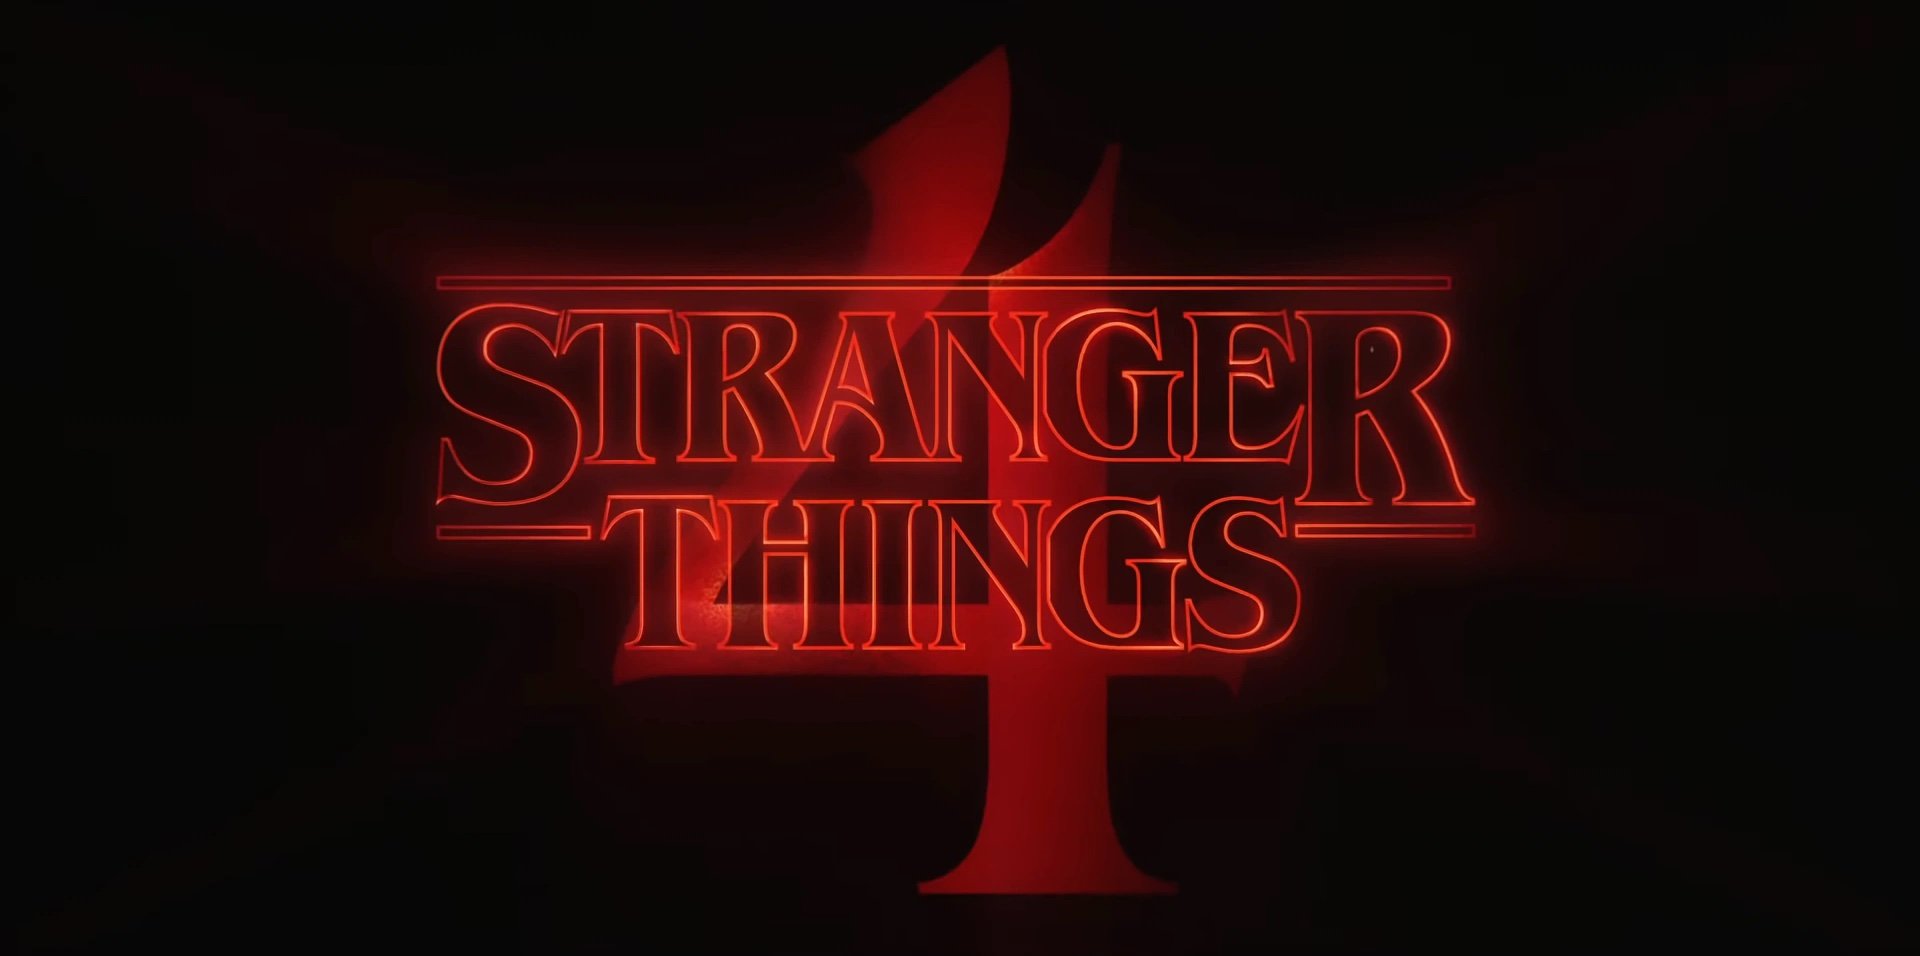 Who dies in 'Stranger Things' Season 4? This image contains the logo for 'Stranger Things' Season 4.